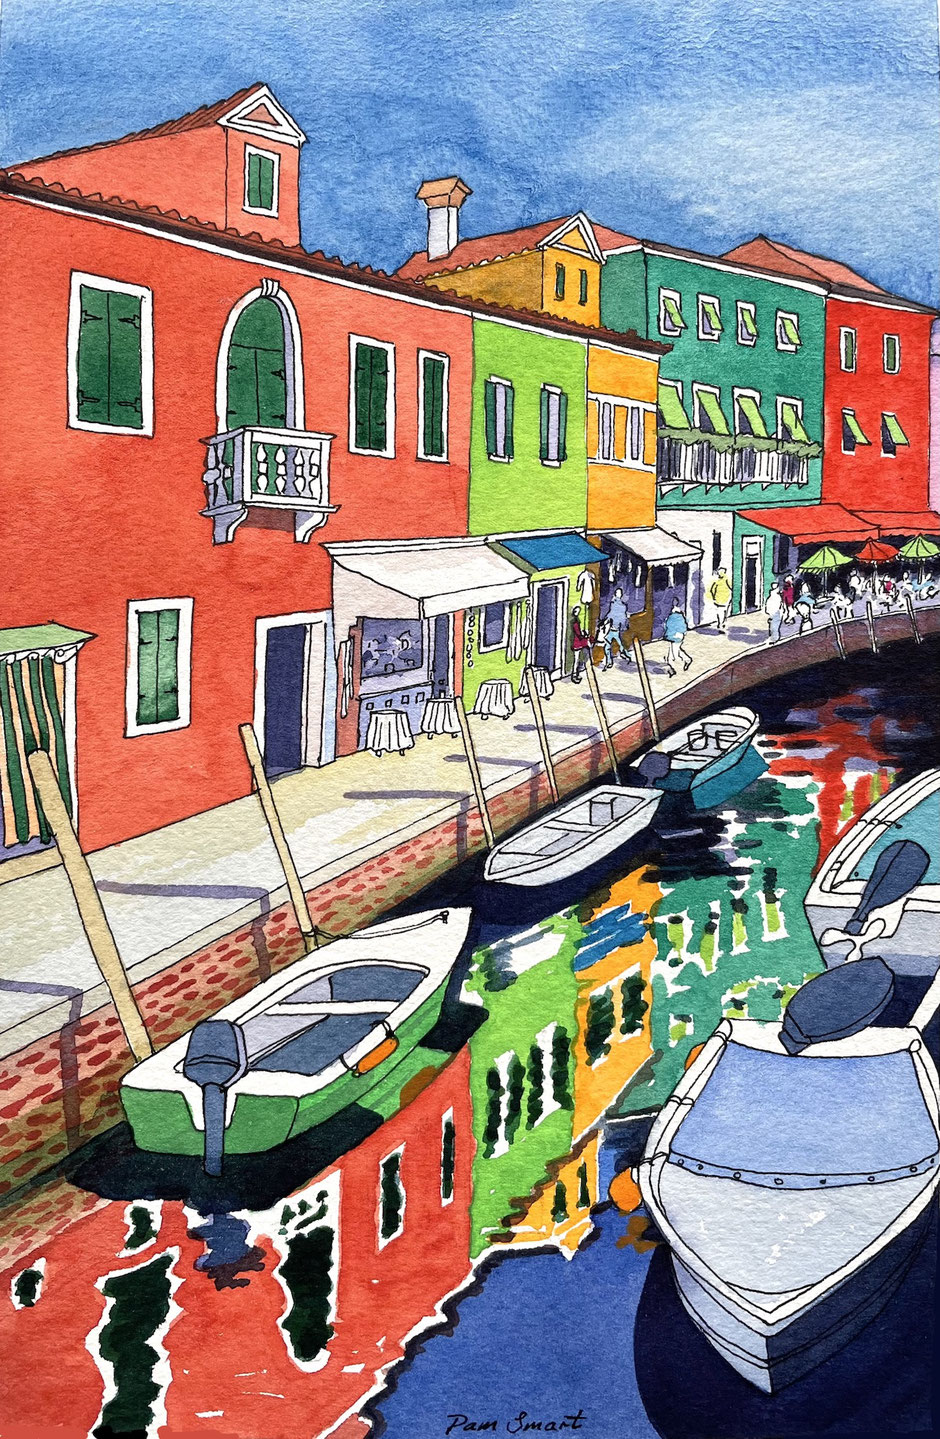 Colourful houses on the Venetian island of Burano